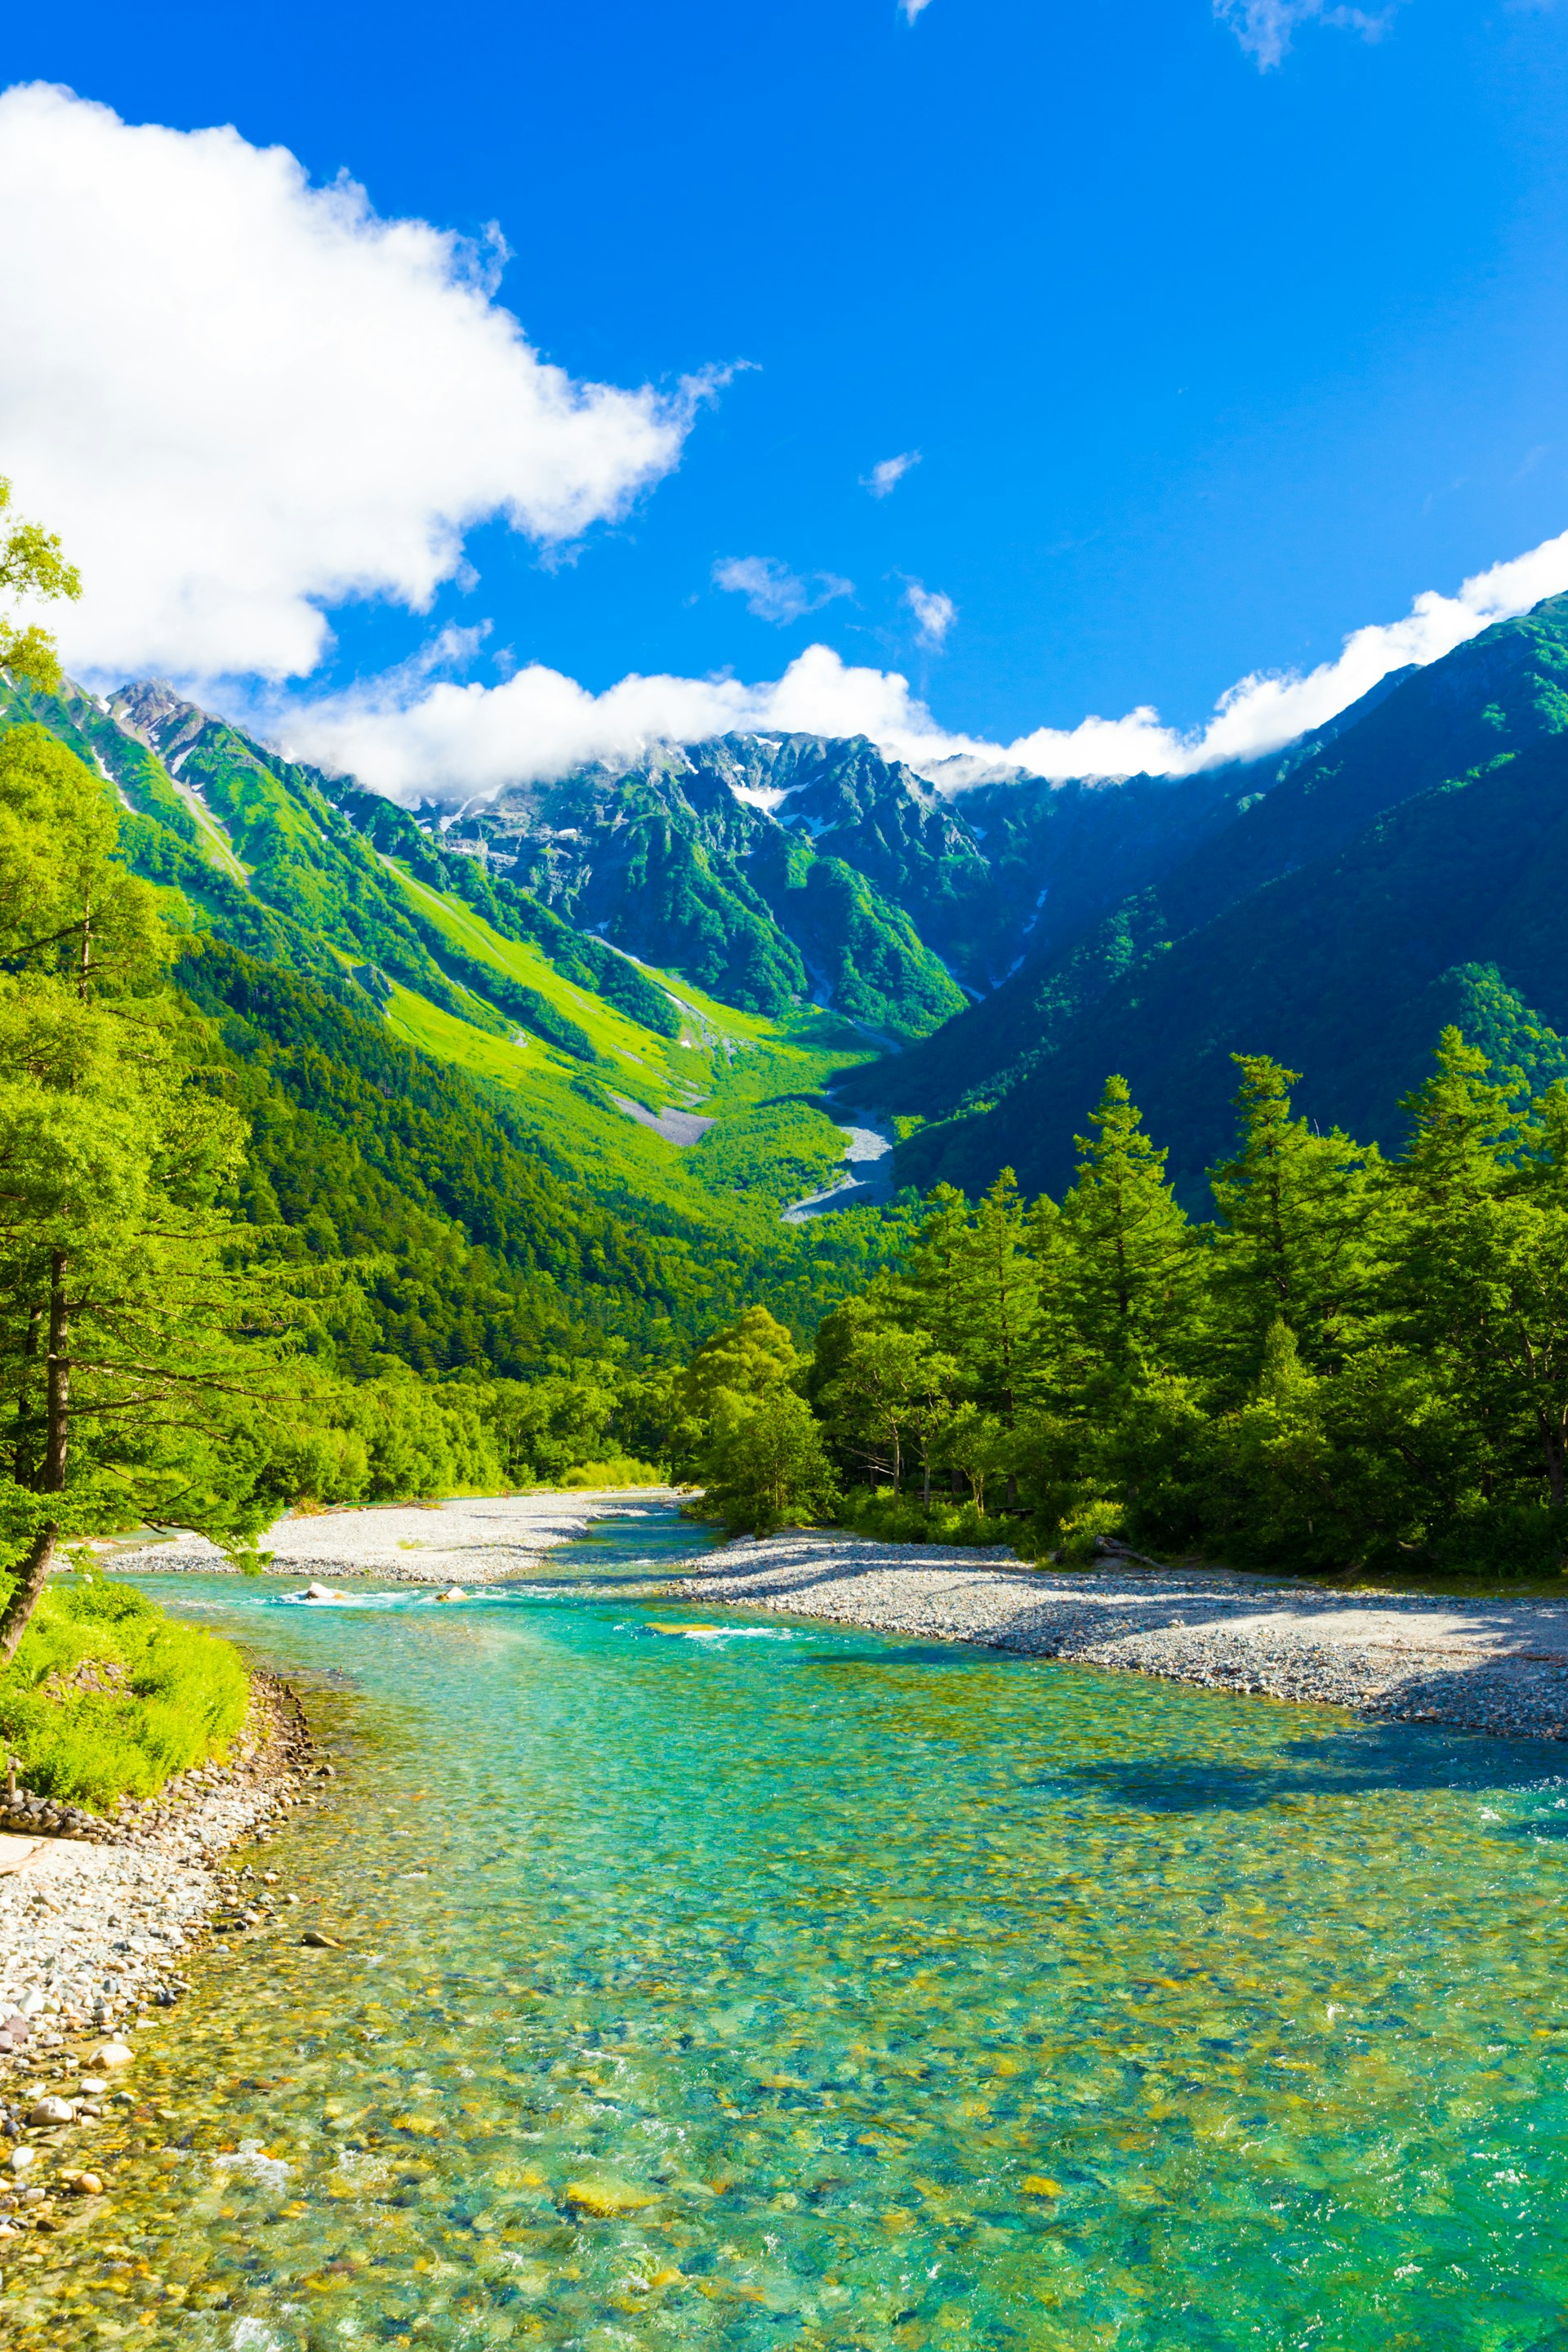 A pristine clear green-blue river flows in a mountainous region